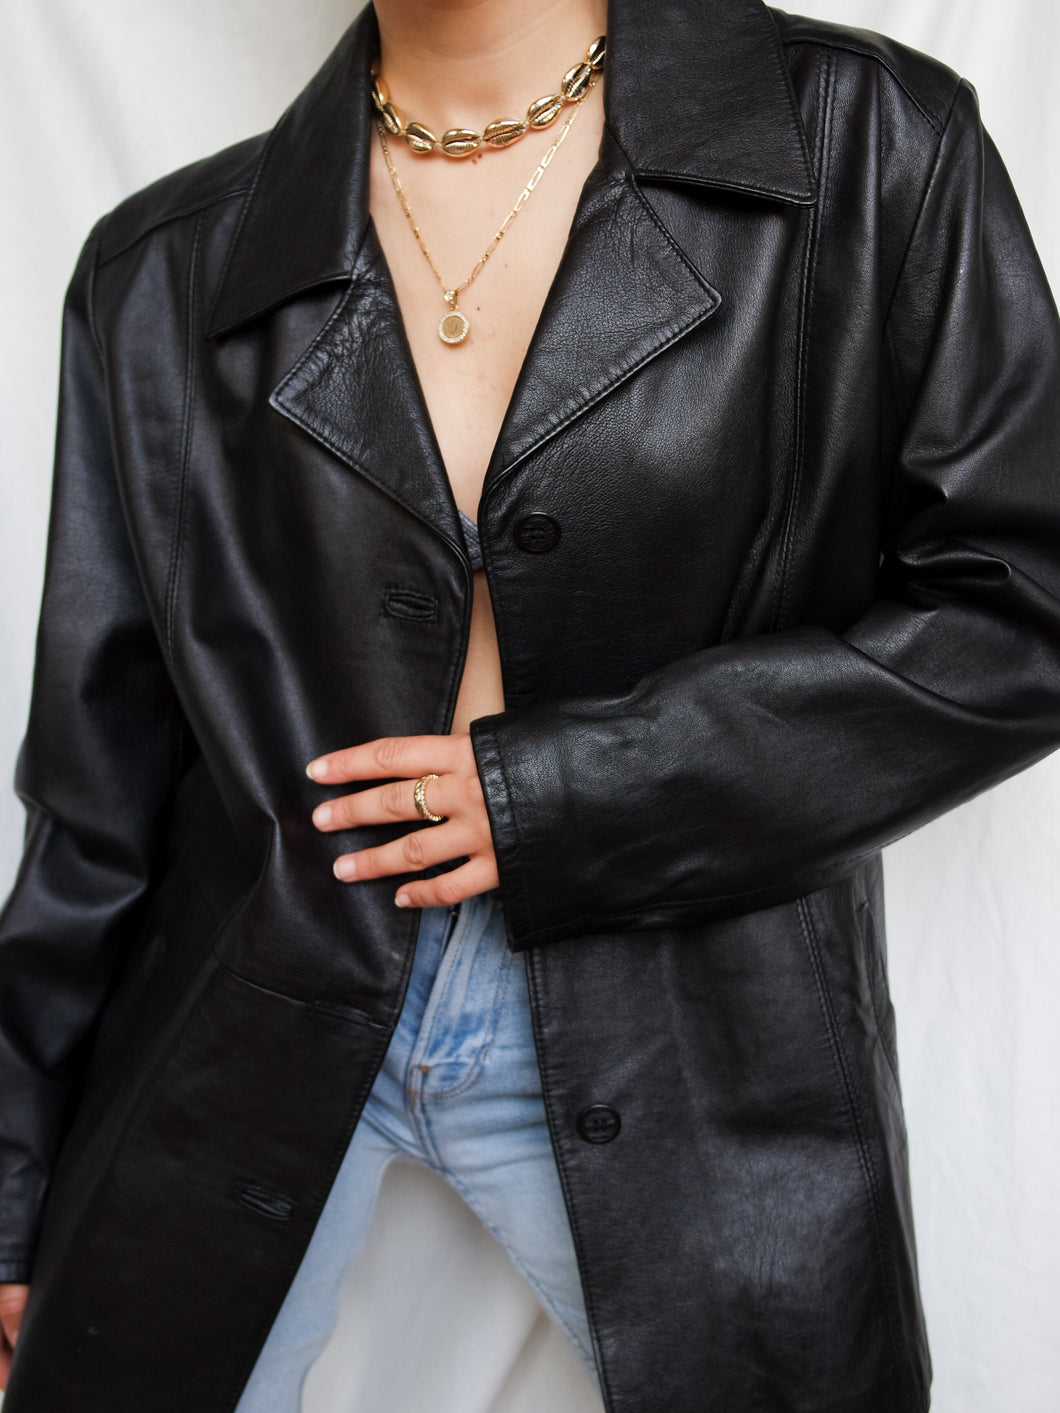 Seventies leather jacket